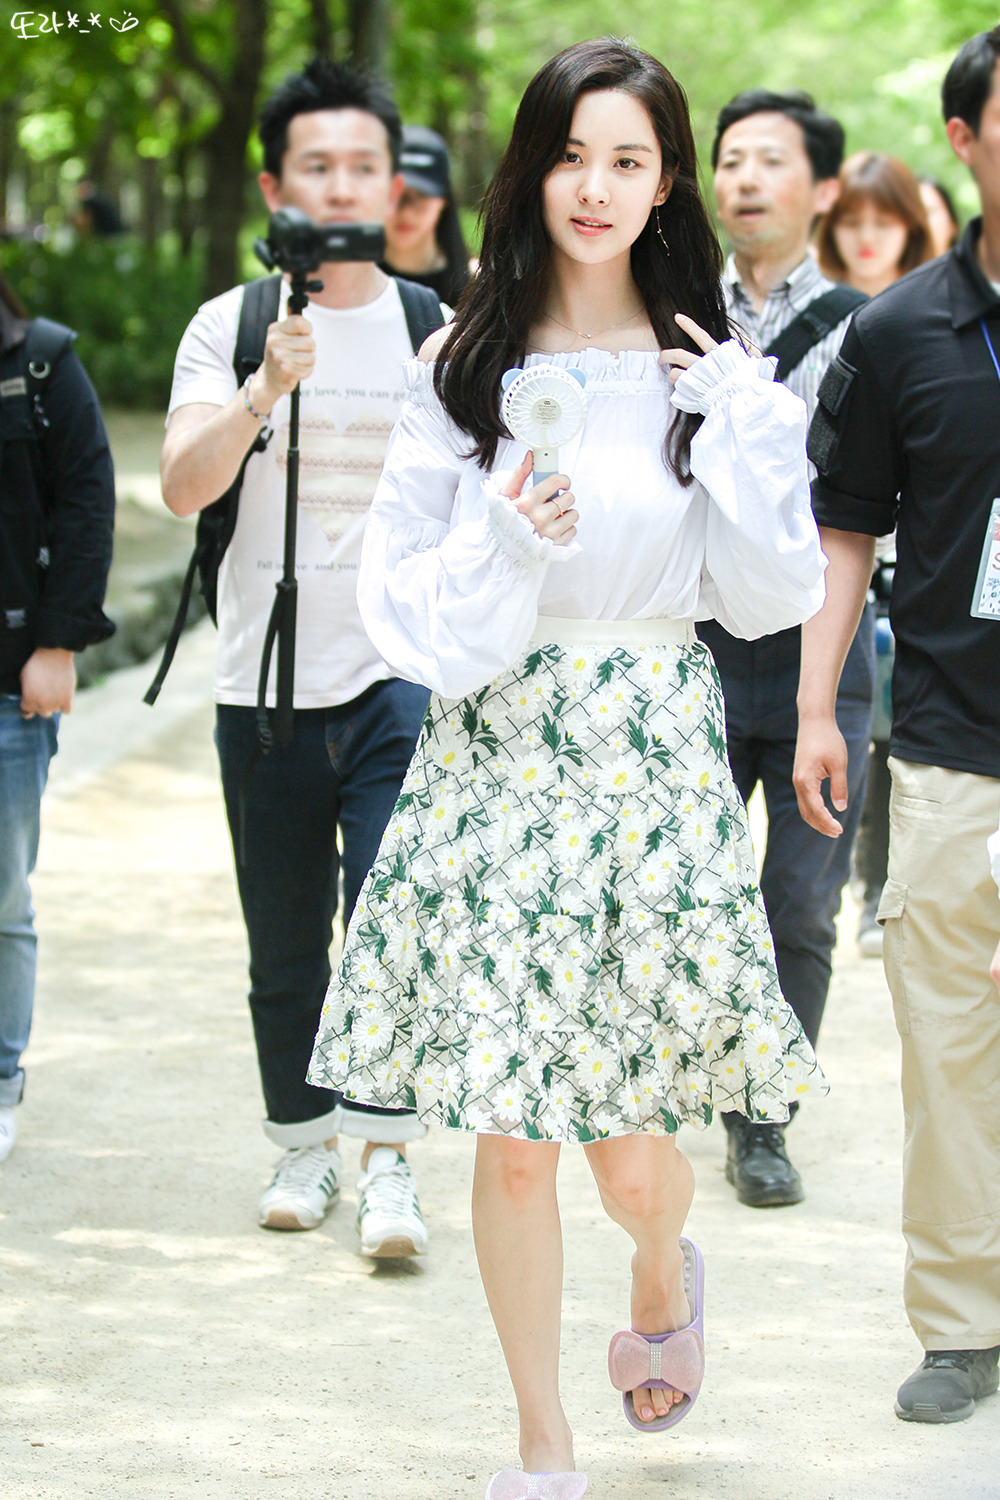  [PIC][03-06-2017]SeoHyun tham dự sự kiện “City Forestival - Maeil Duyou 'Confidence Diary'” vào chiều nay - Page 3 252C14485937A63801310C